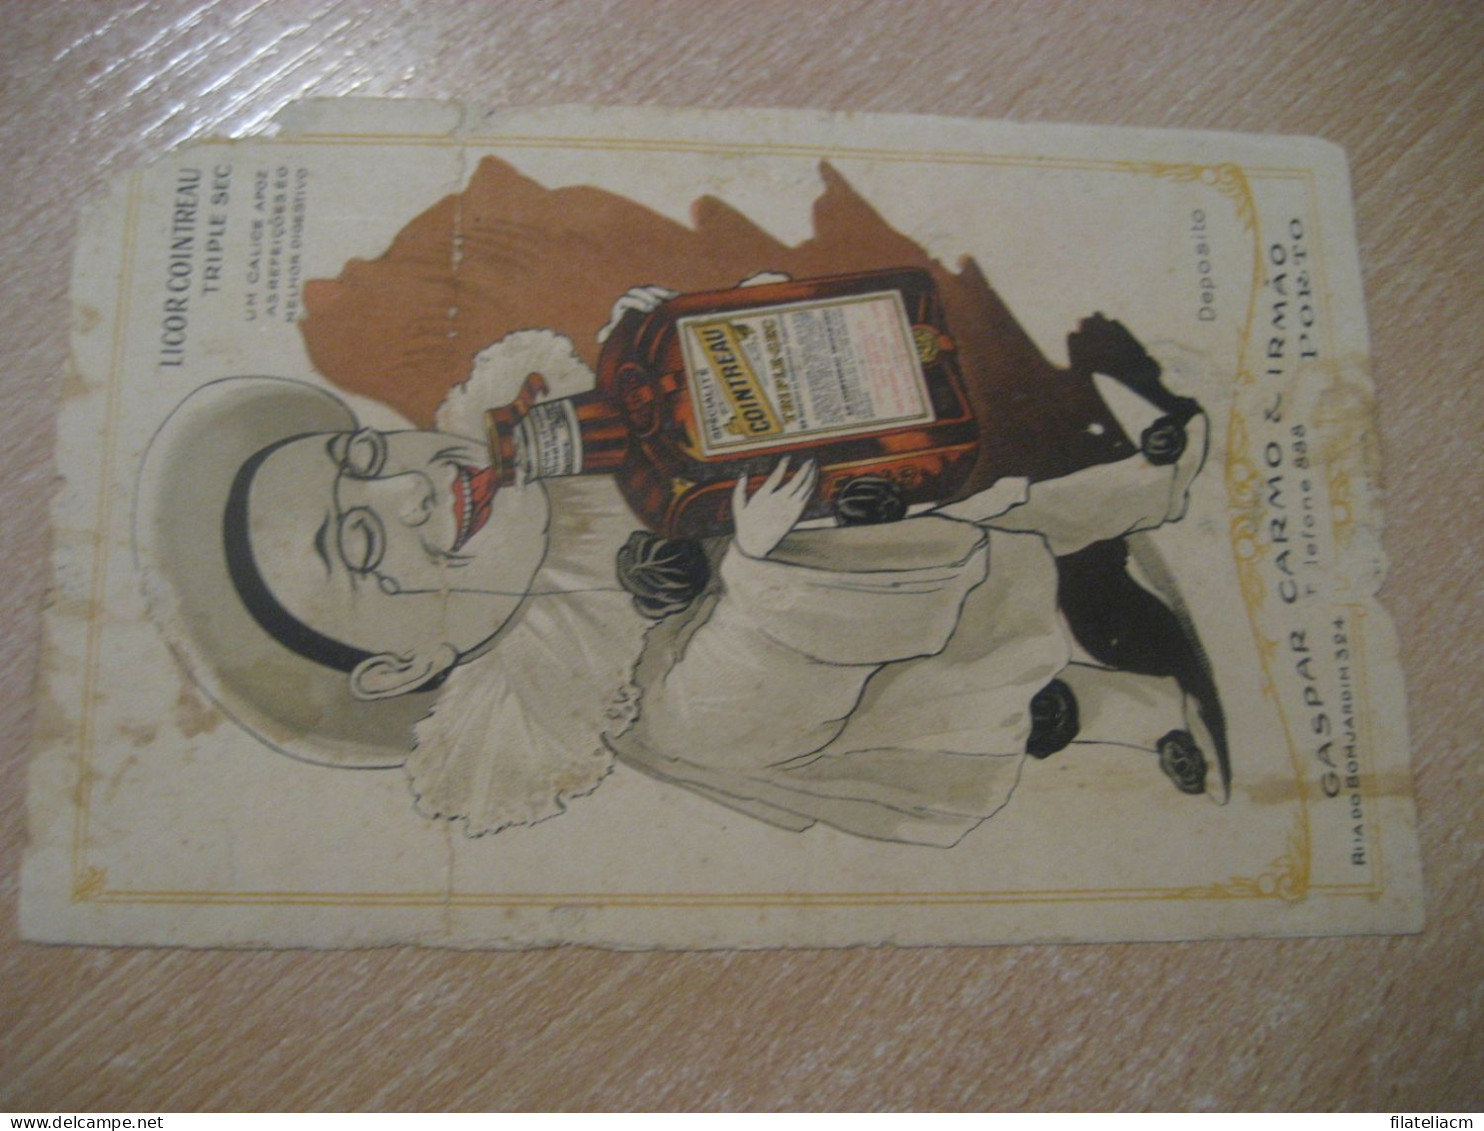 COINTREAU Licor PORTO 1921 To Figueira Da Foz Damaged Bilhete Postal Postcard PORTUGAL - Advertising